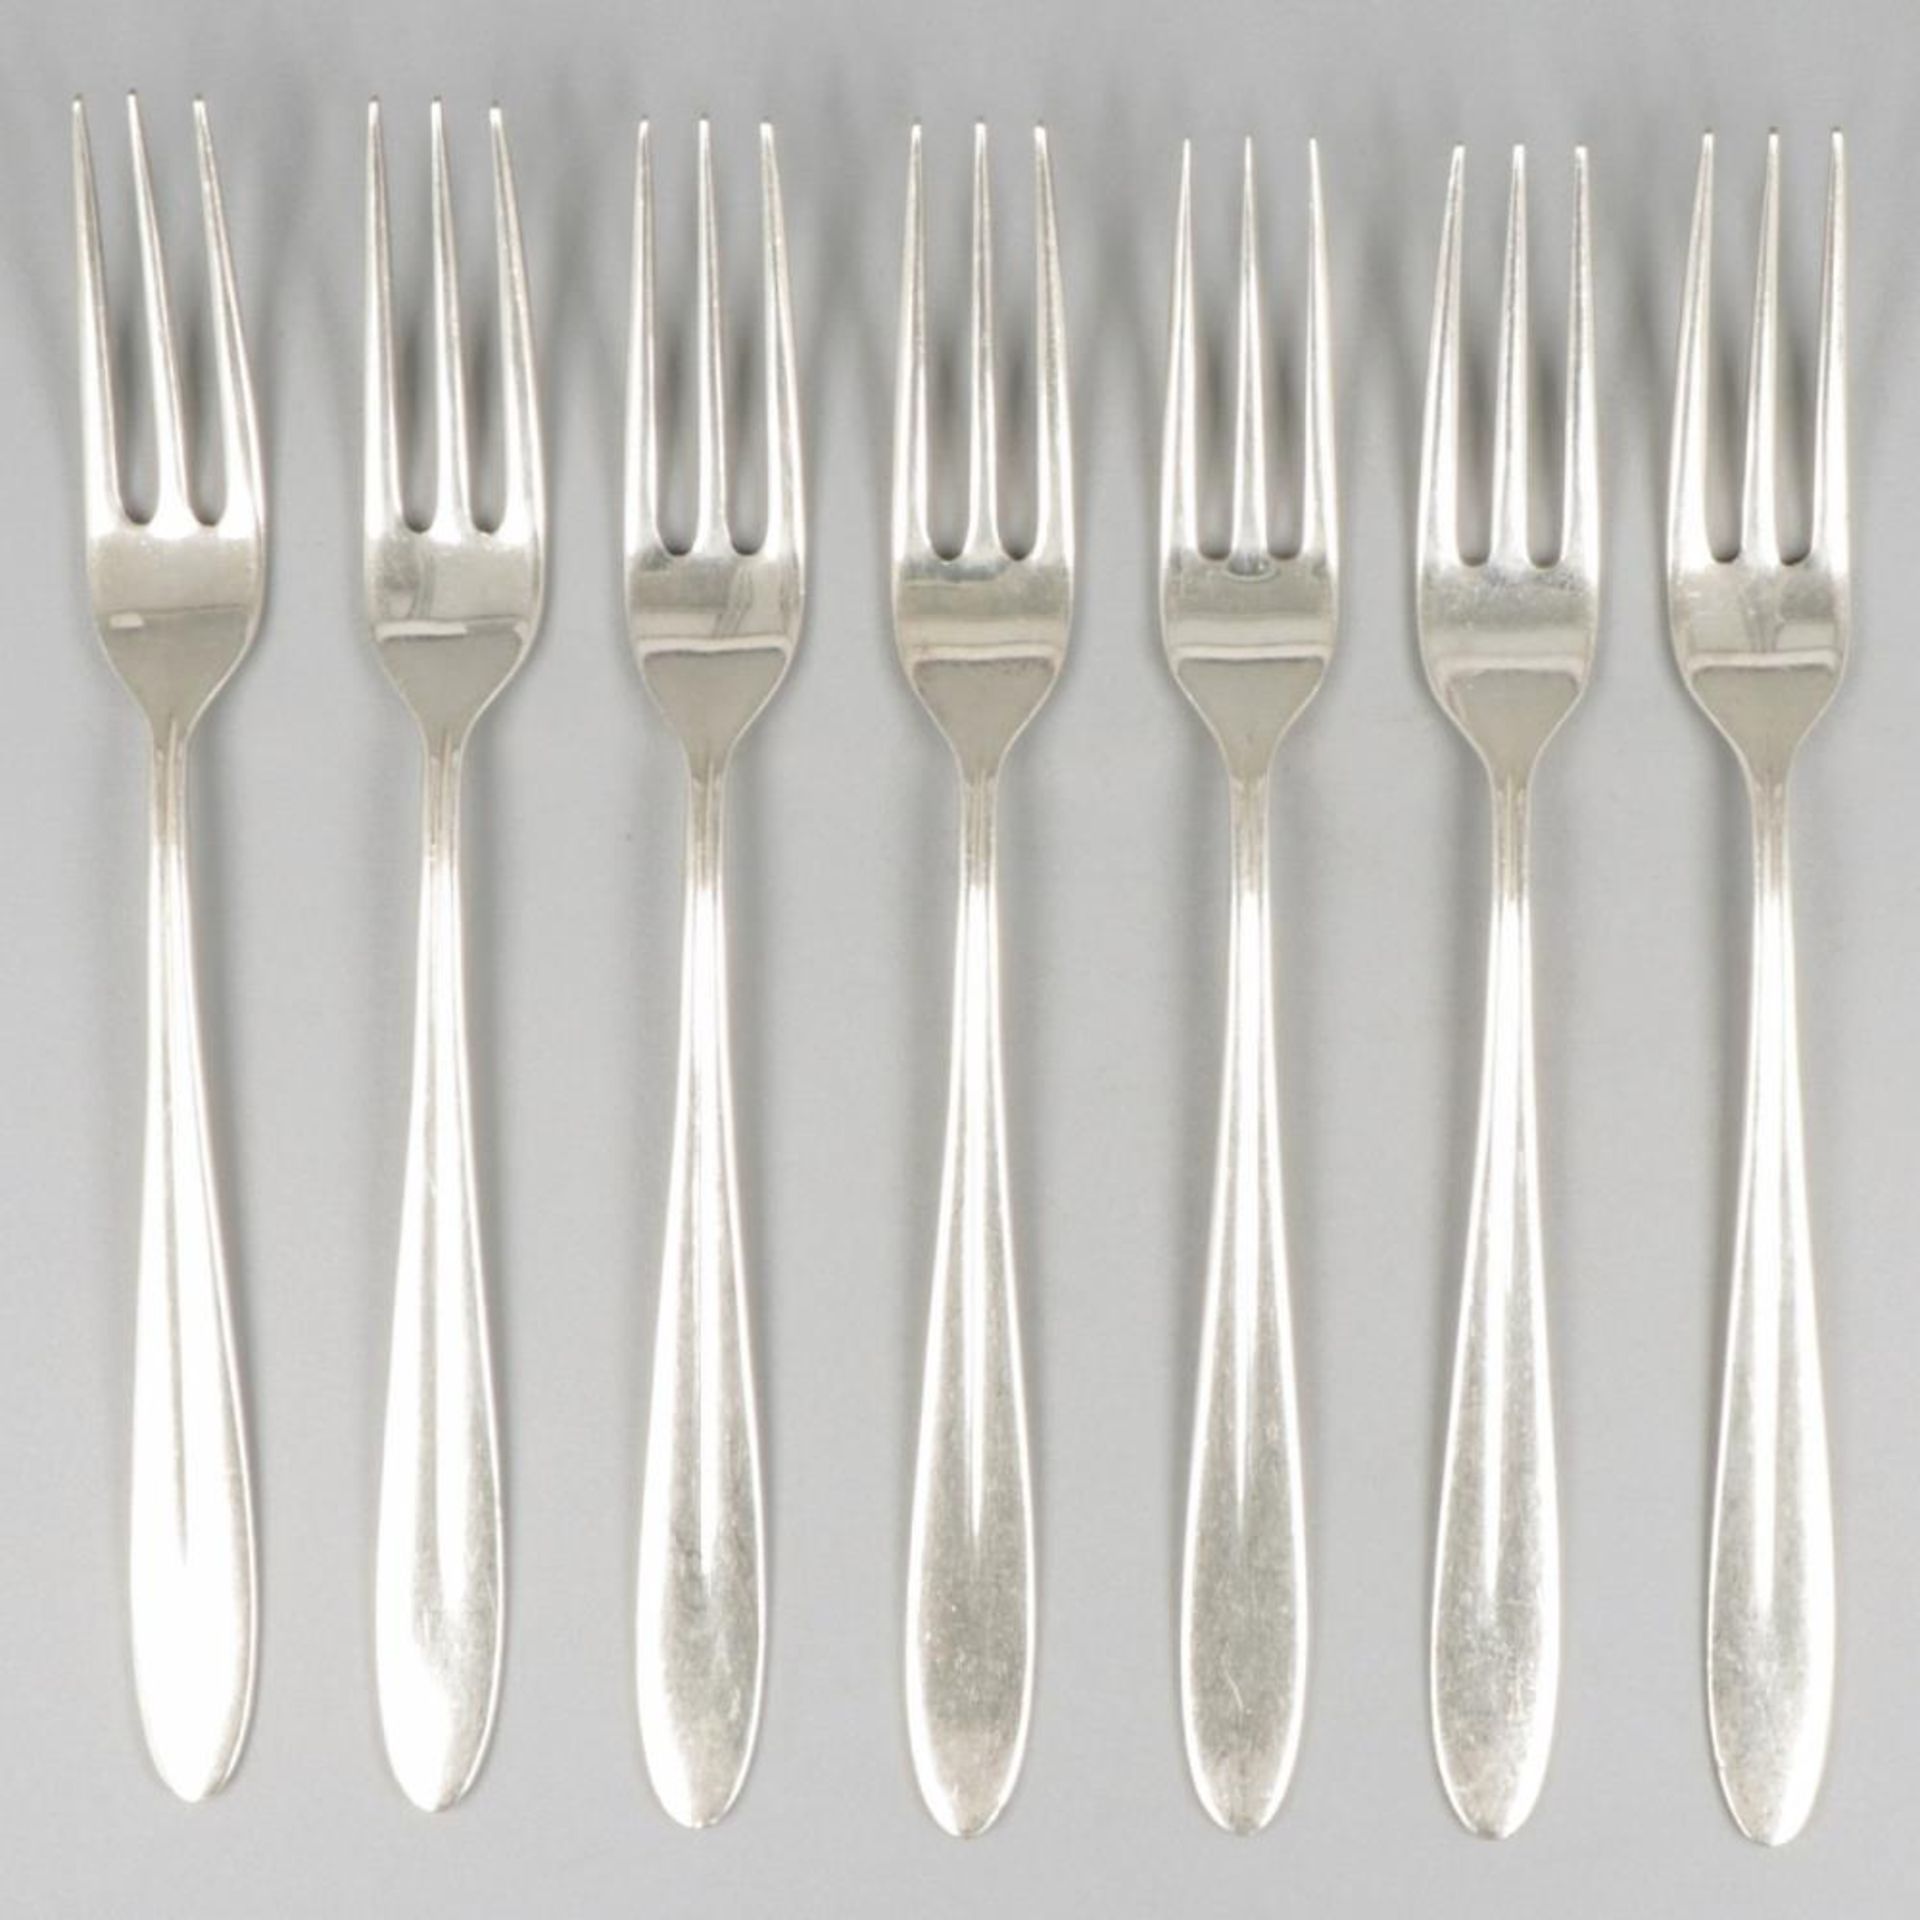 6-piece set of forks silver.